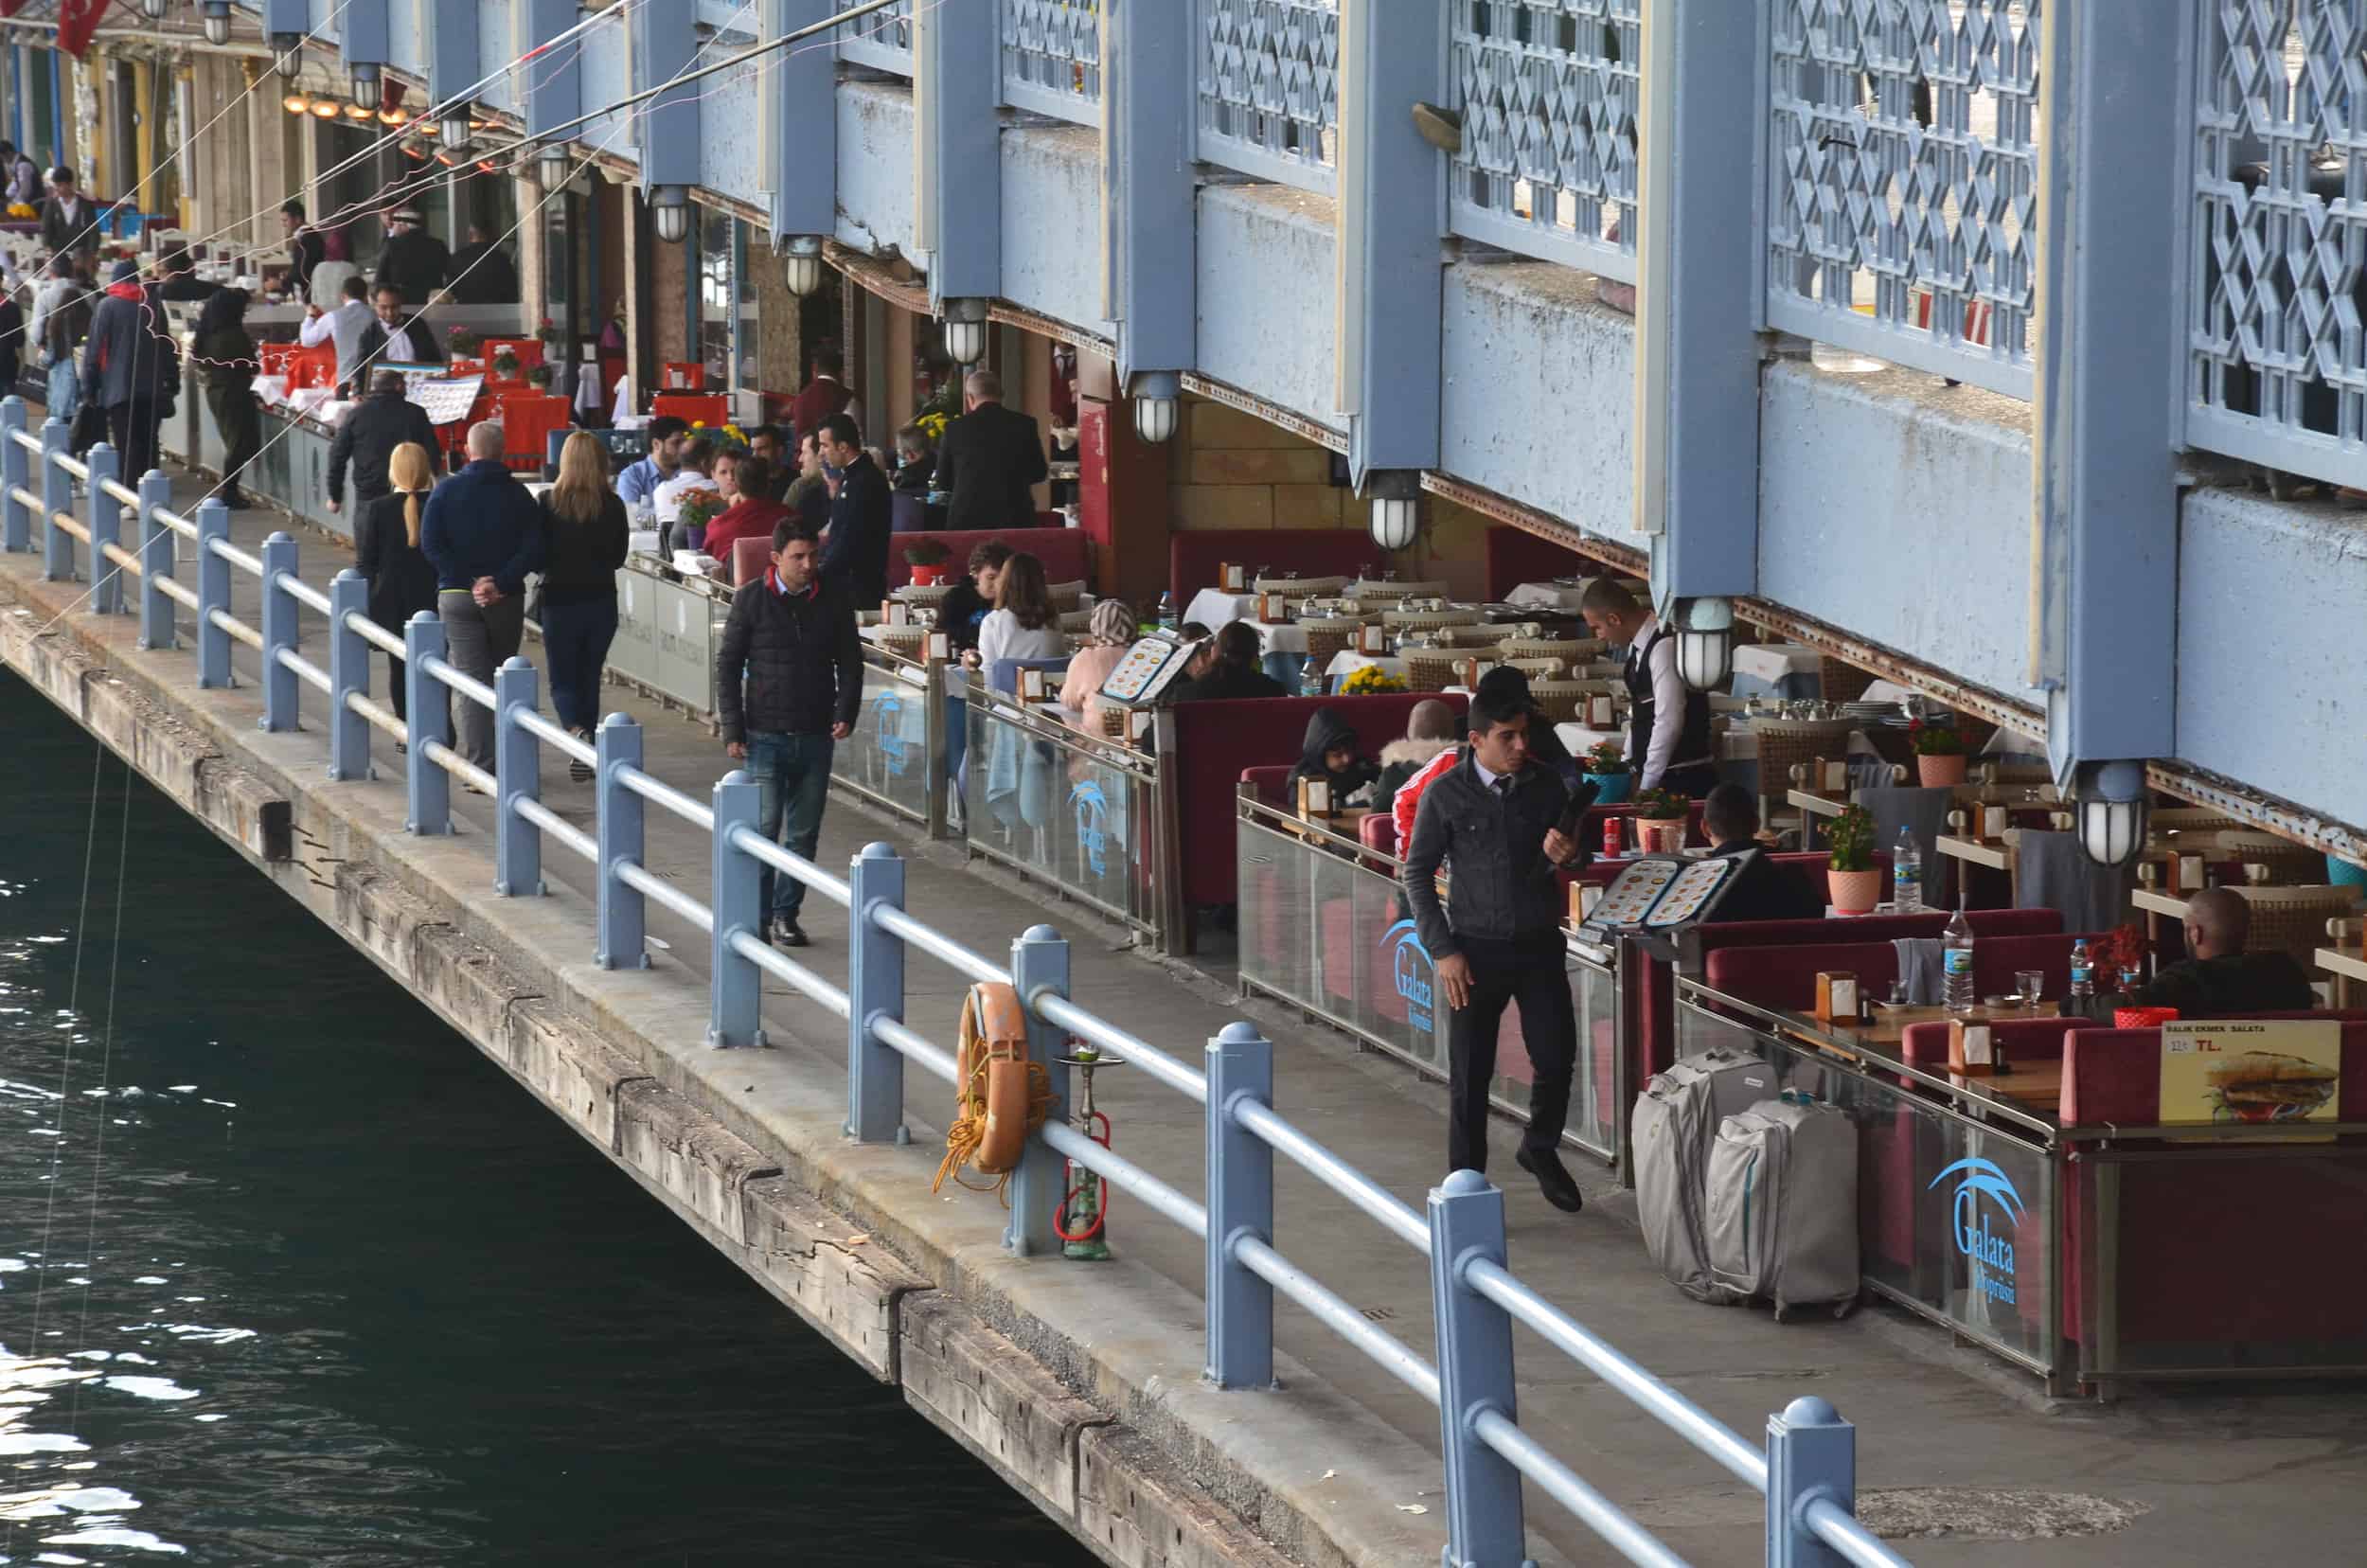 Restaurants on the lower level of the Galata Bridge in Istanbul, Turkey